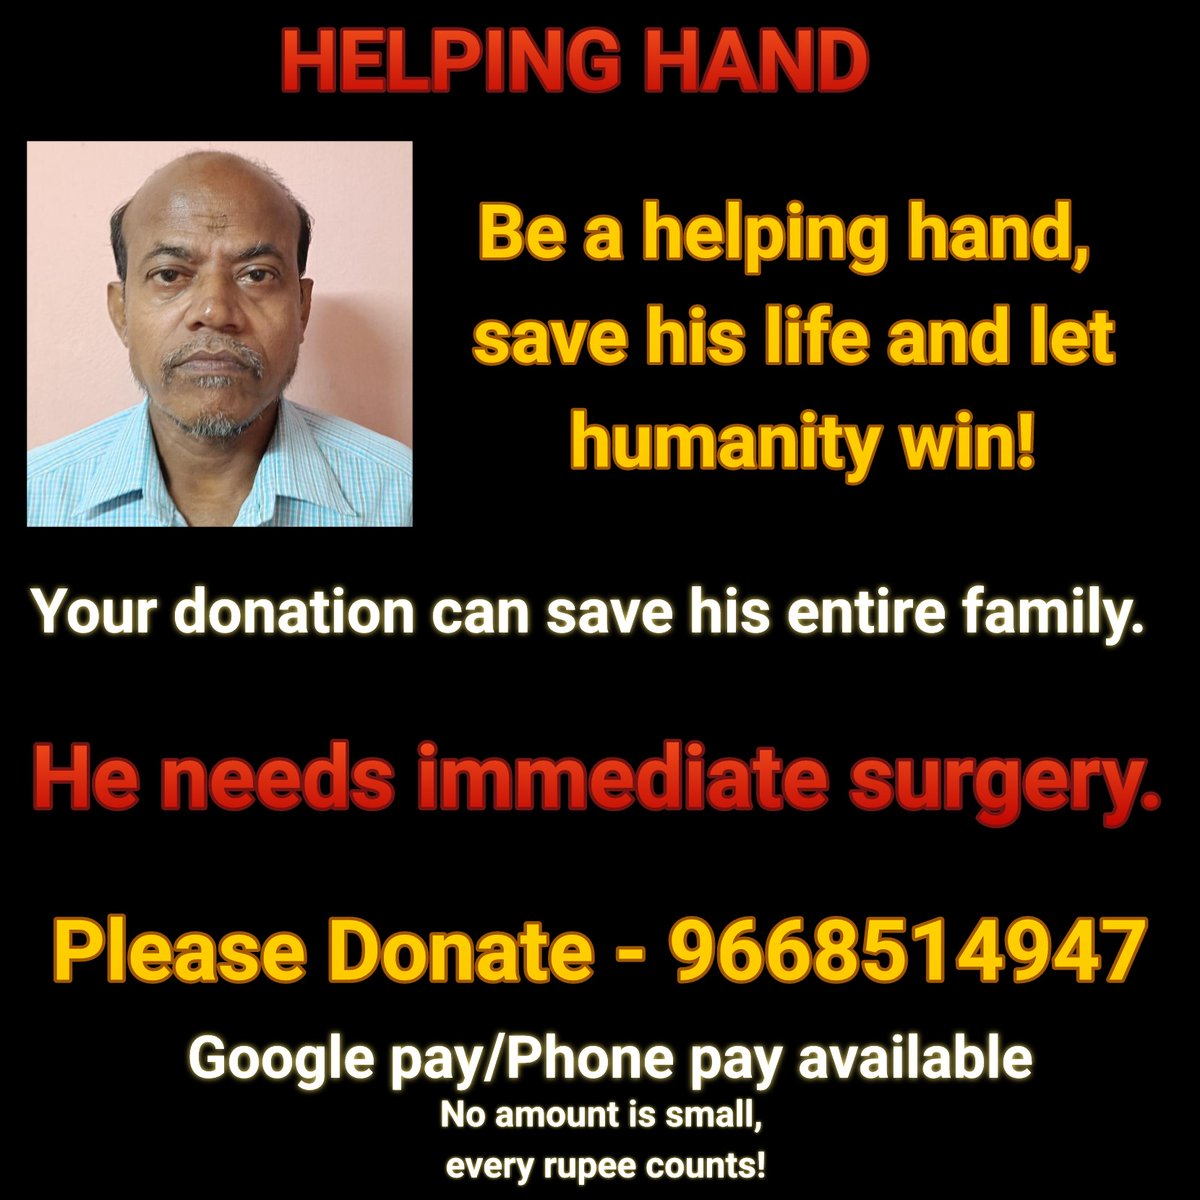 Let's prove humanity still exists. Donate towards saving a life. 
Gpay/phonepay- 9668514947

SAVE AMAR LIFE